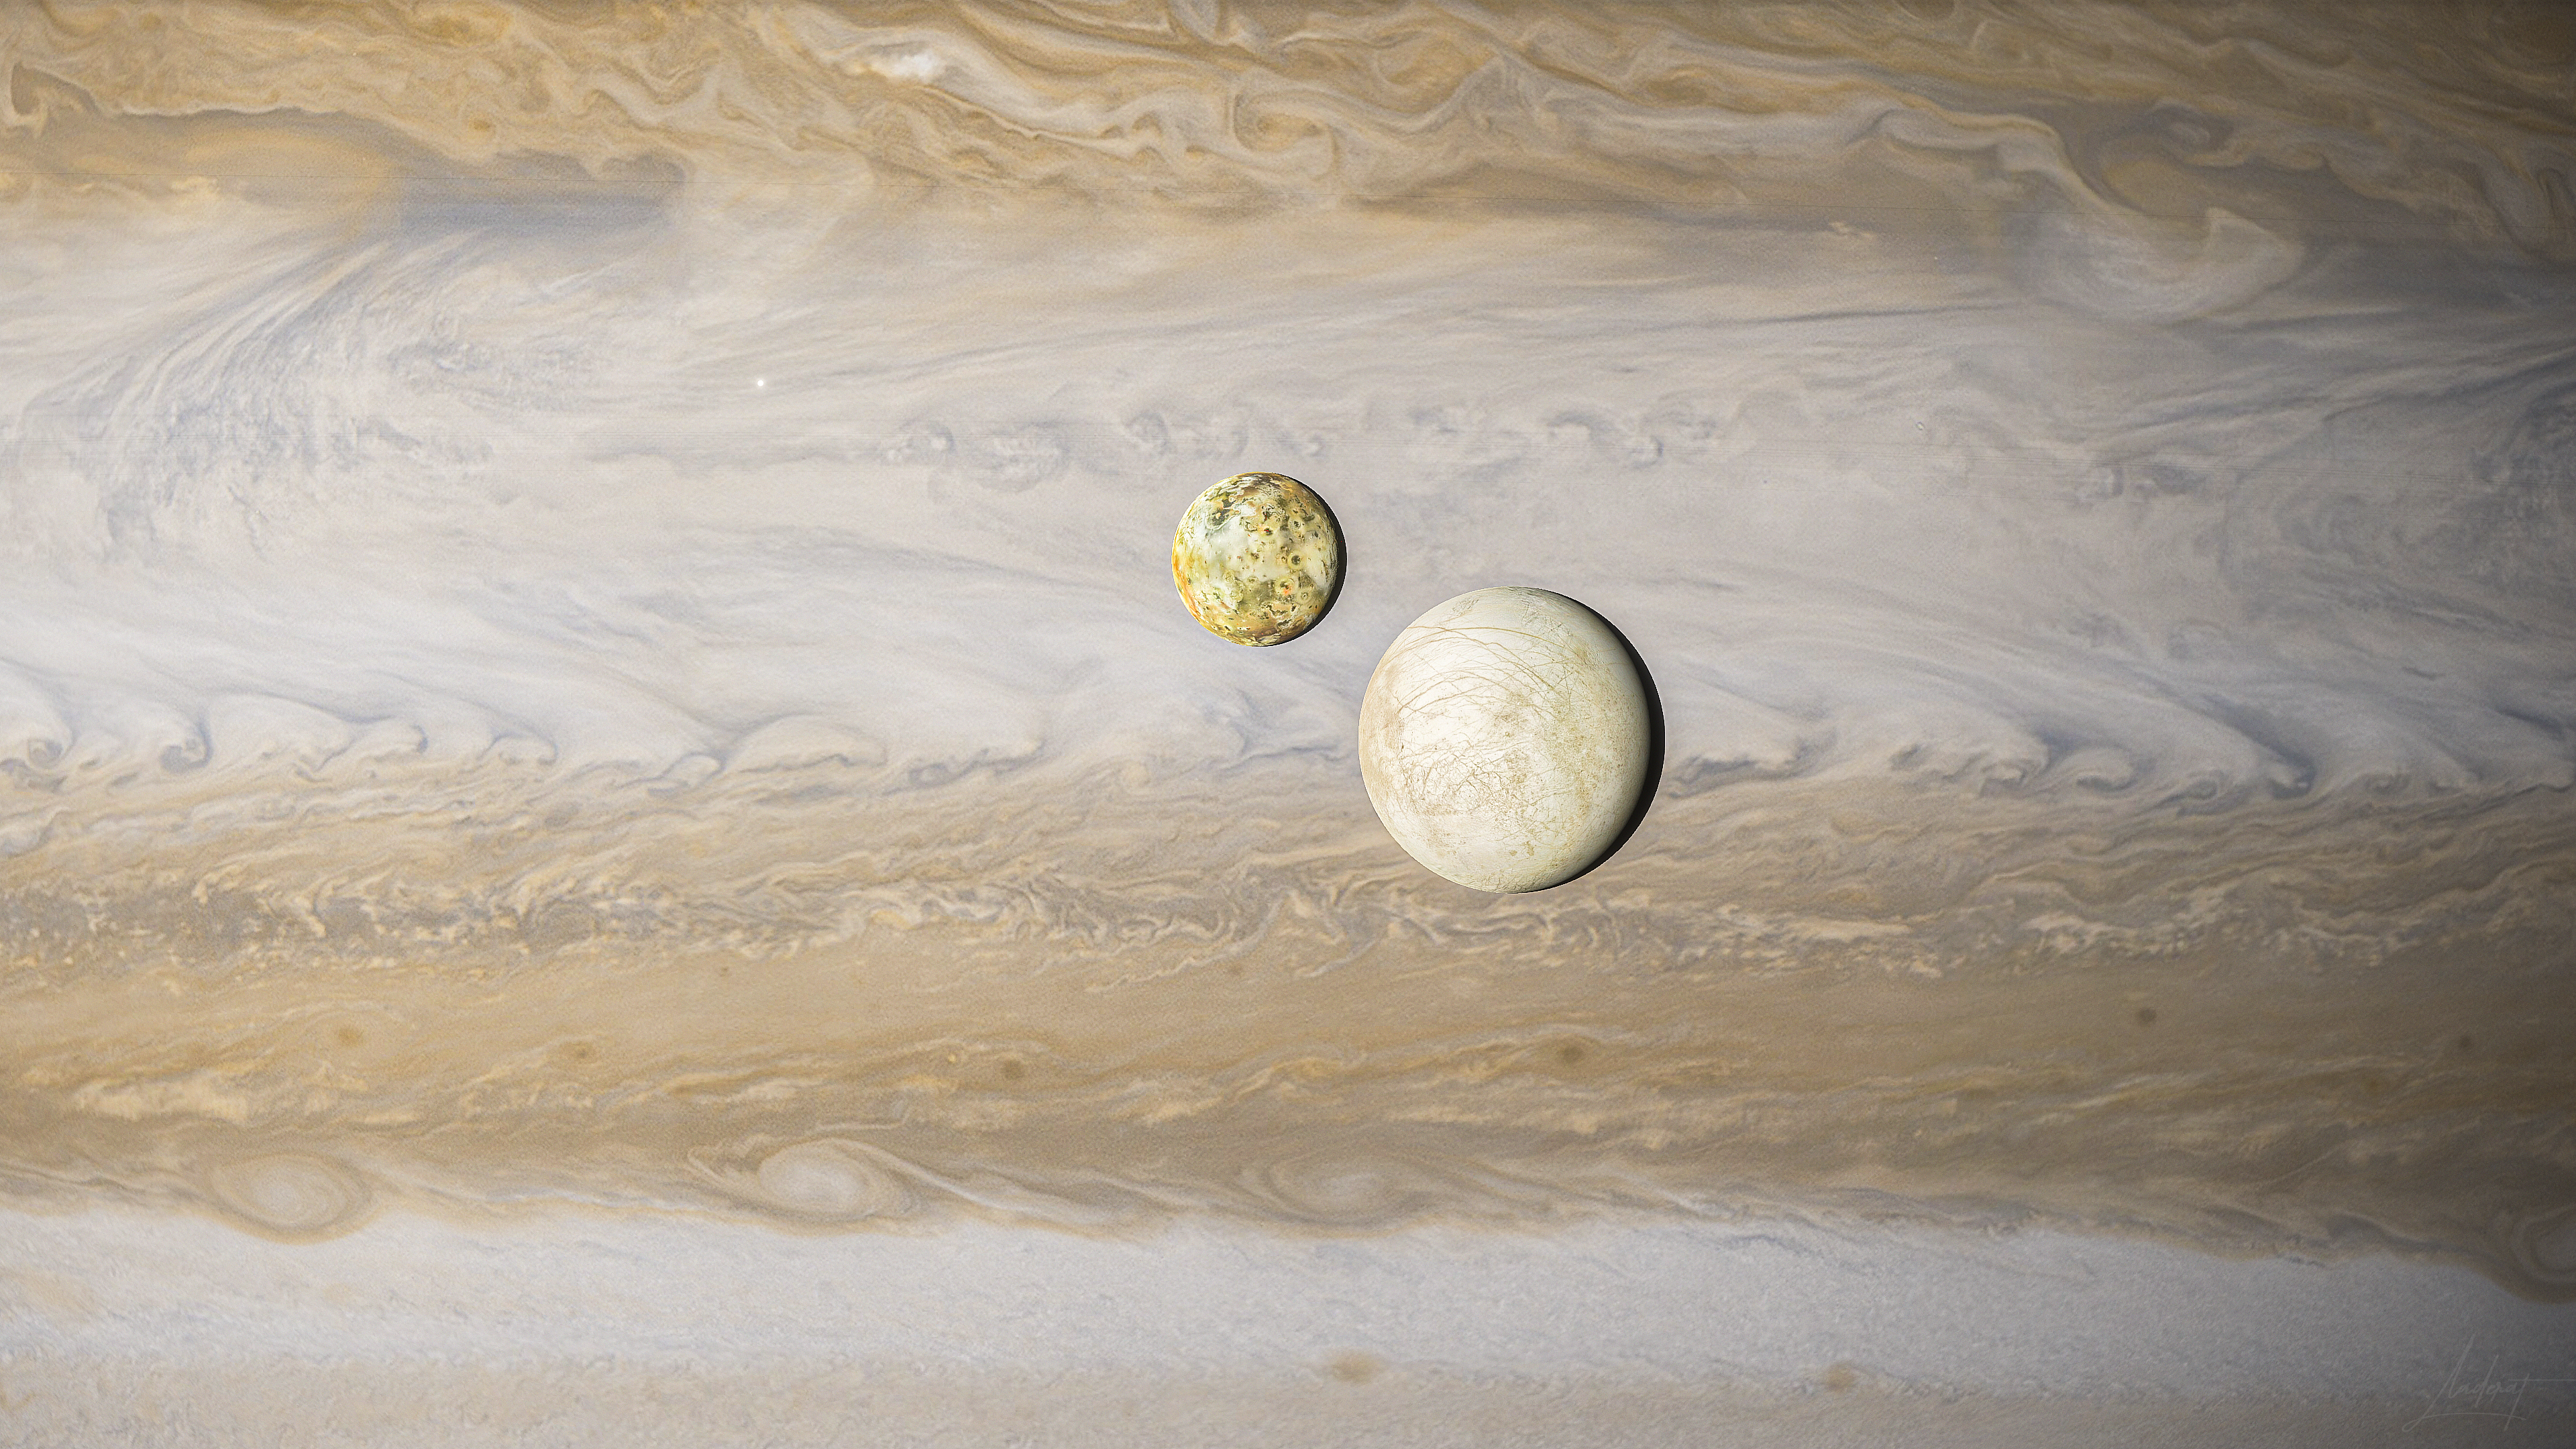 Space Space Engine Jupiter Europa Io Moon 3840x2160